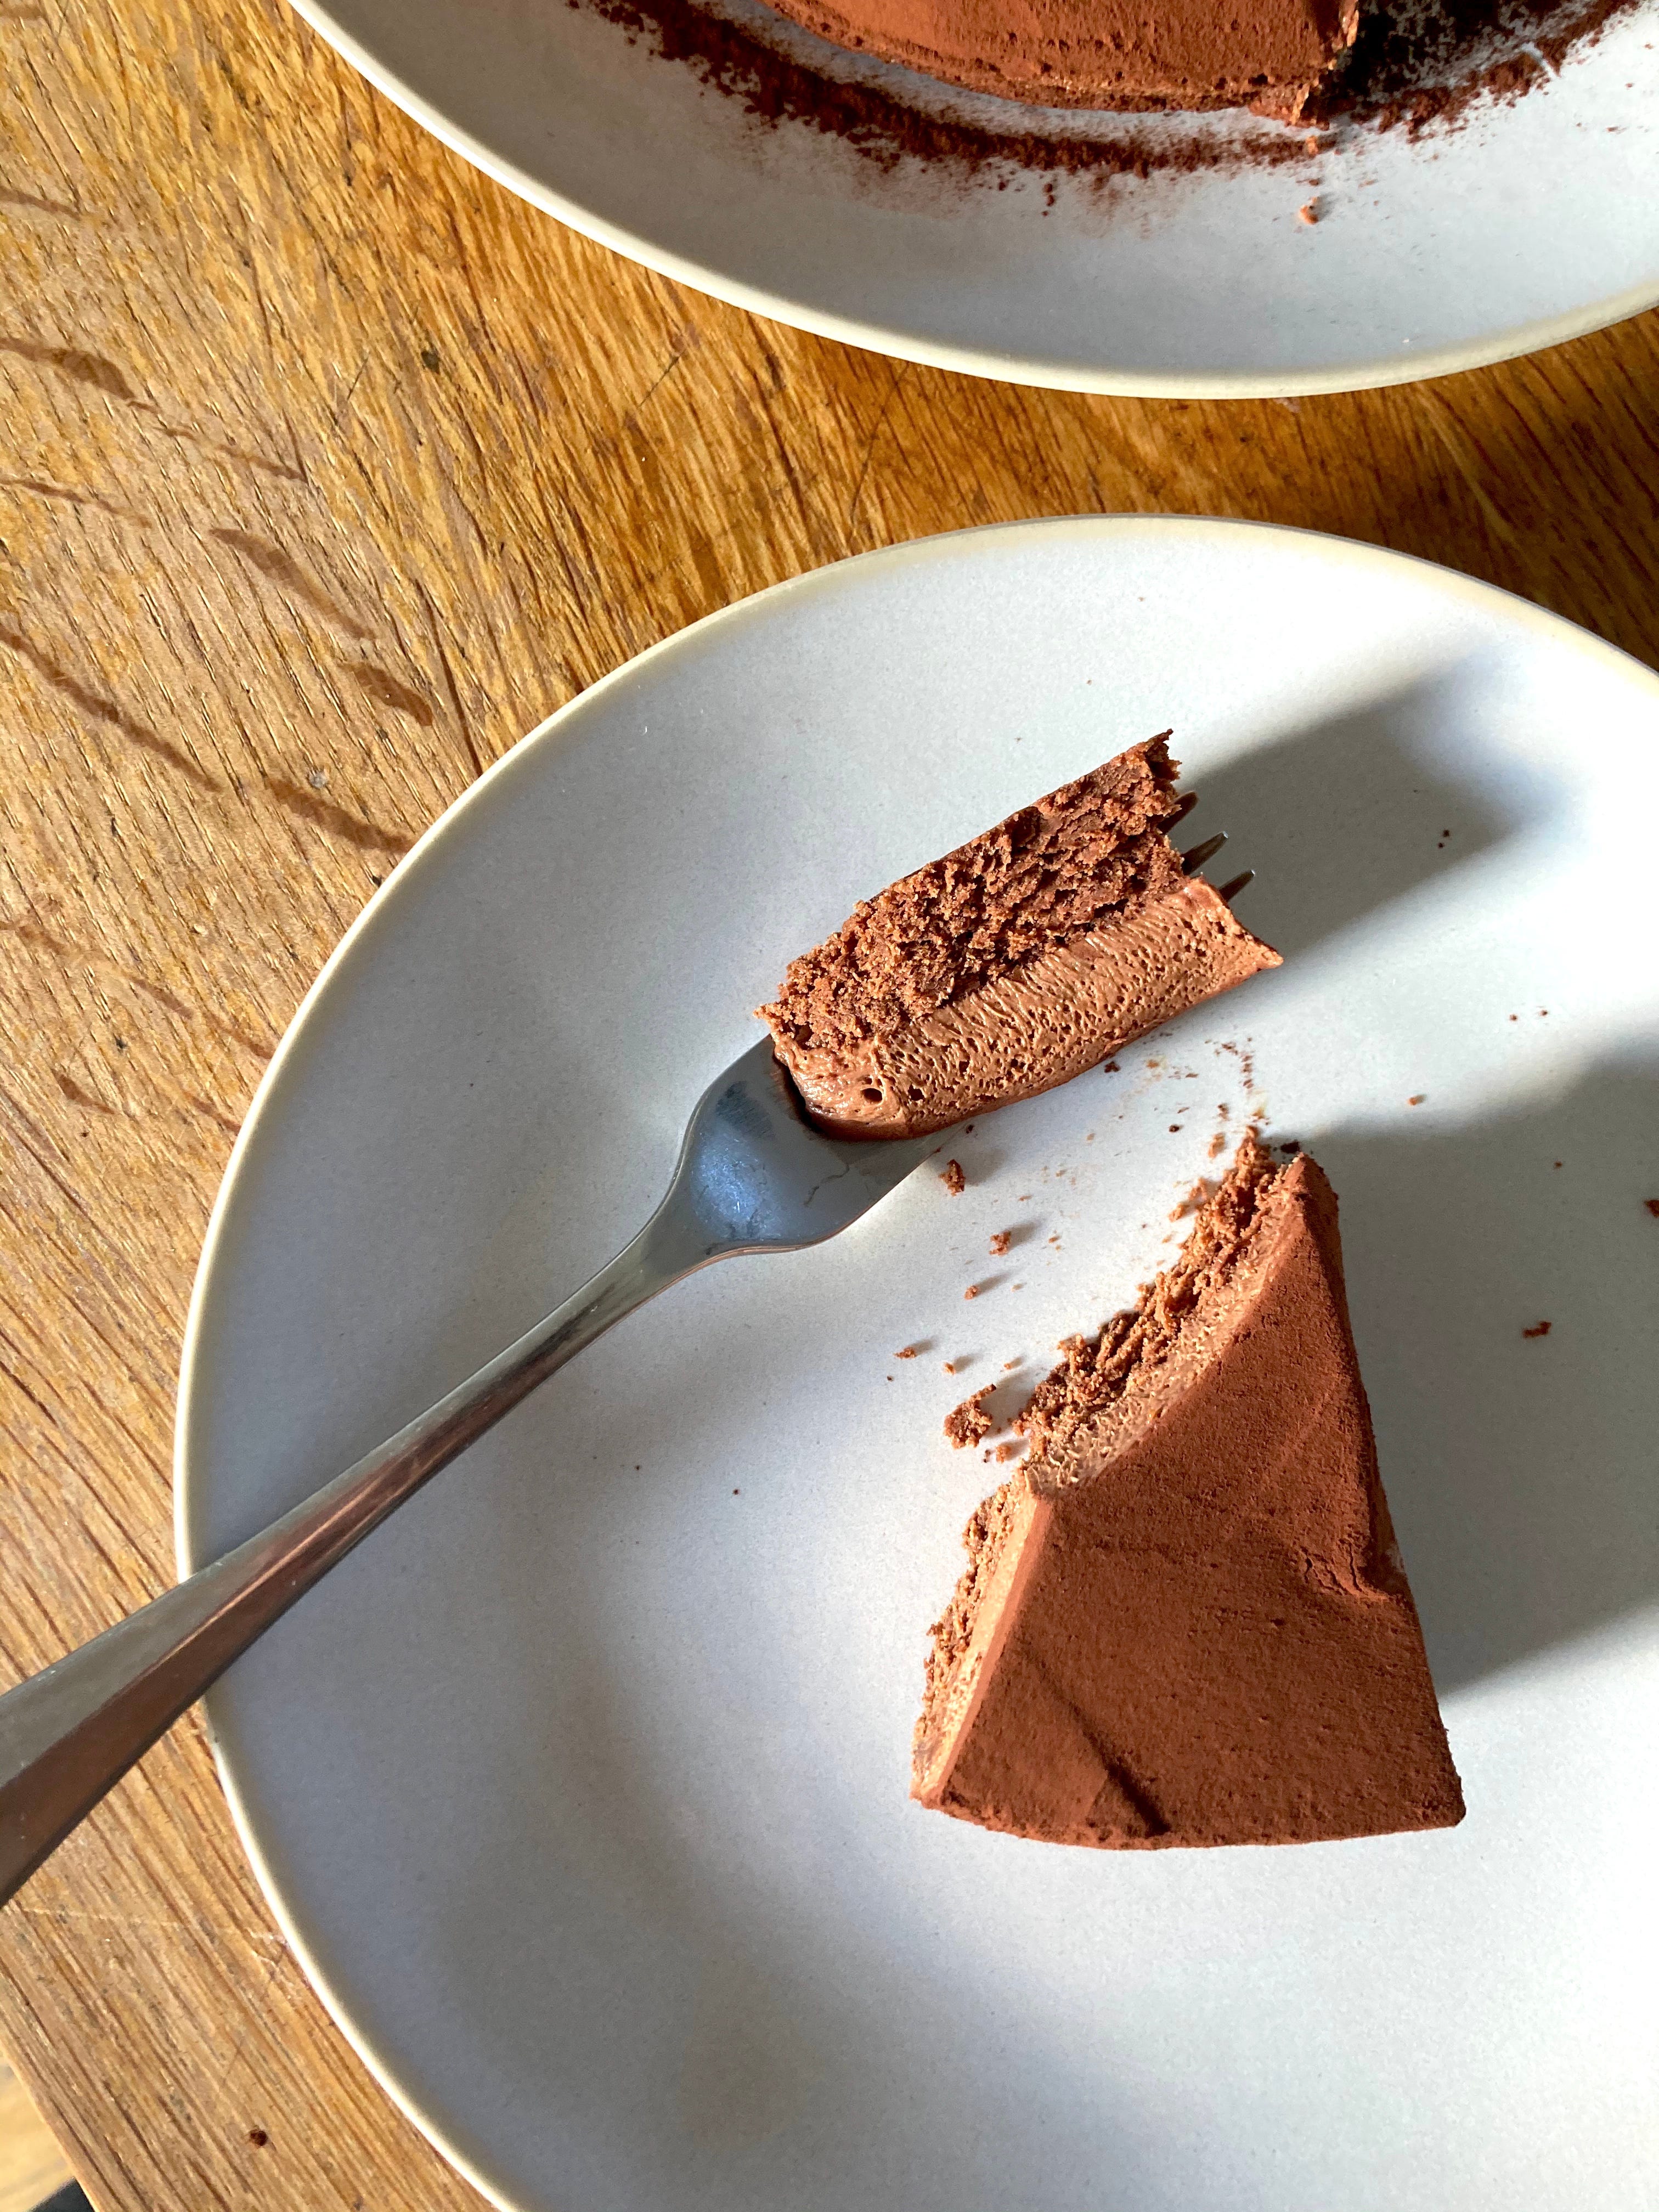 Chocolate cake stock image. Image of chocolatecake, works - 117492775